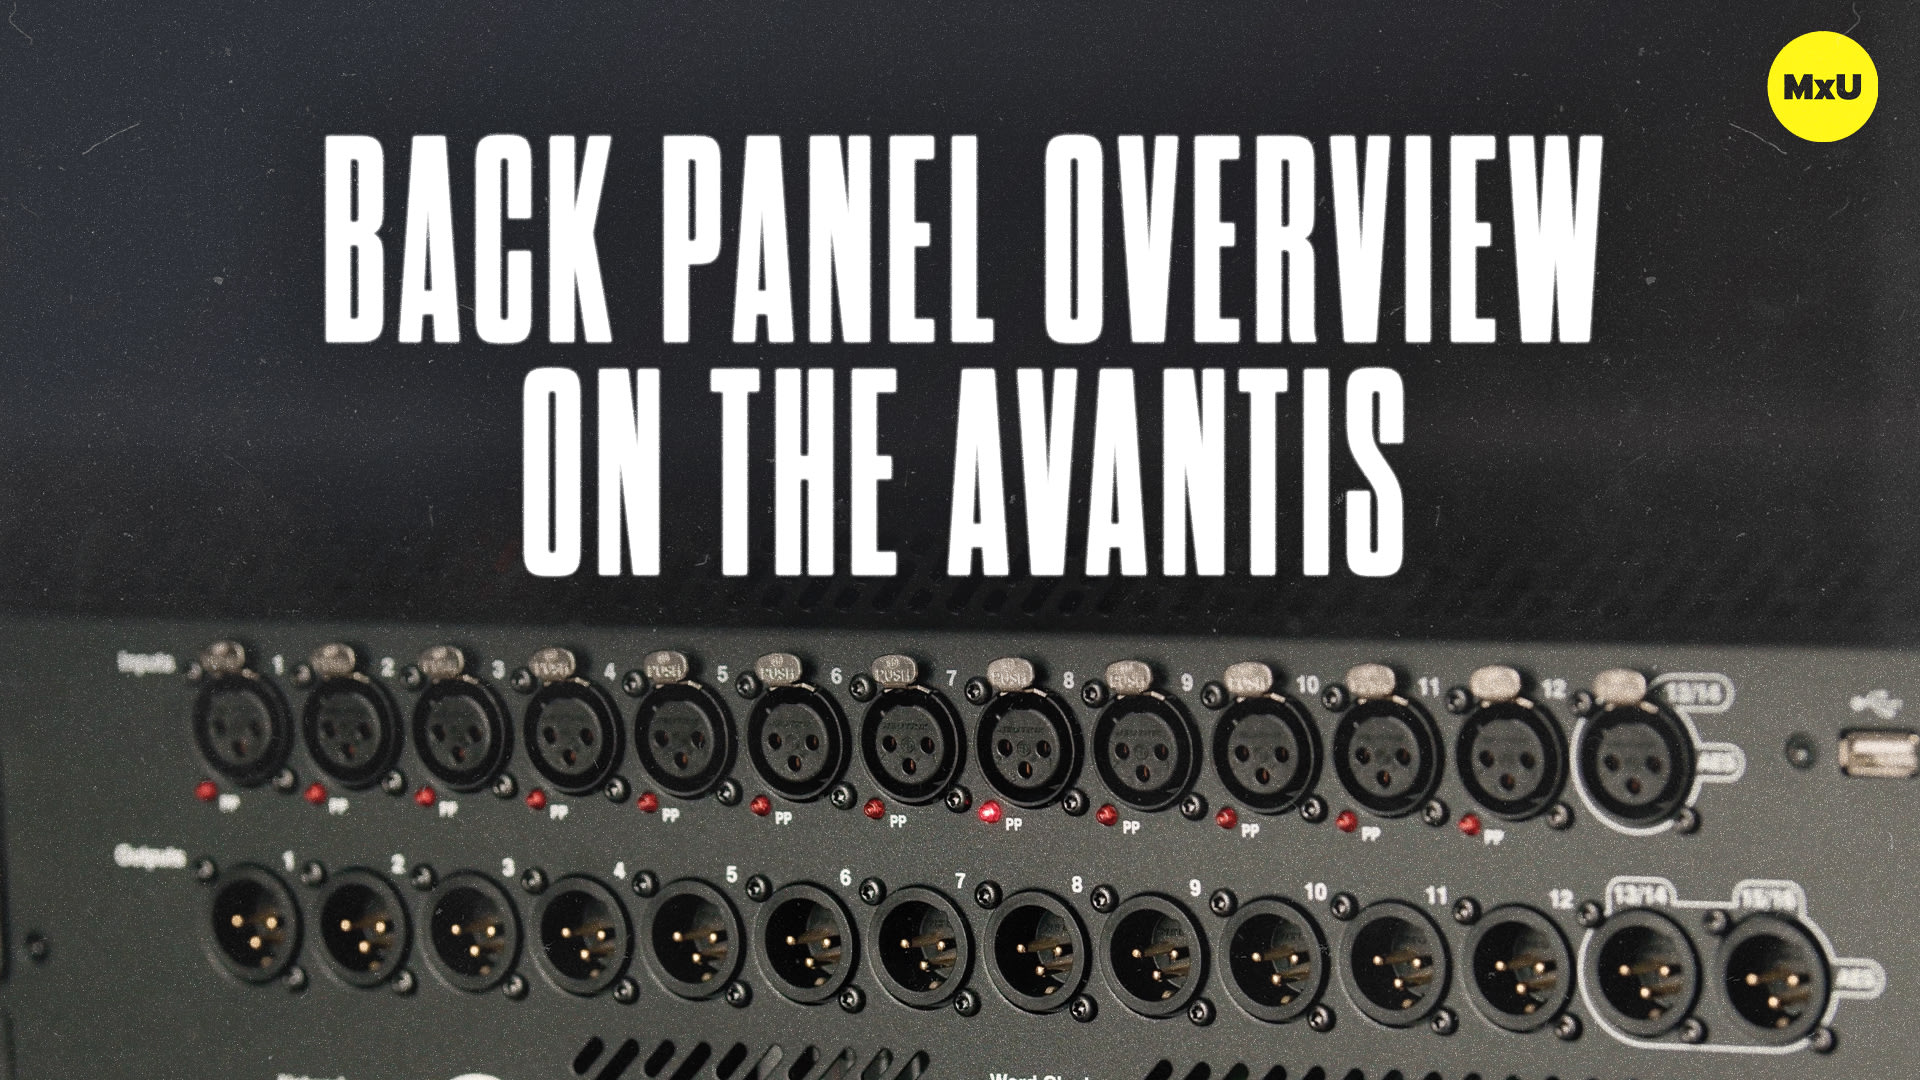 Back Panel Overview on the Avantis